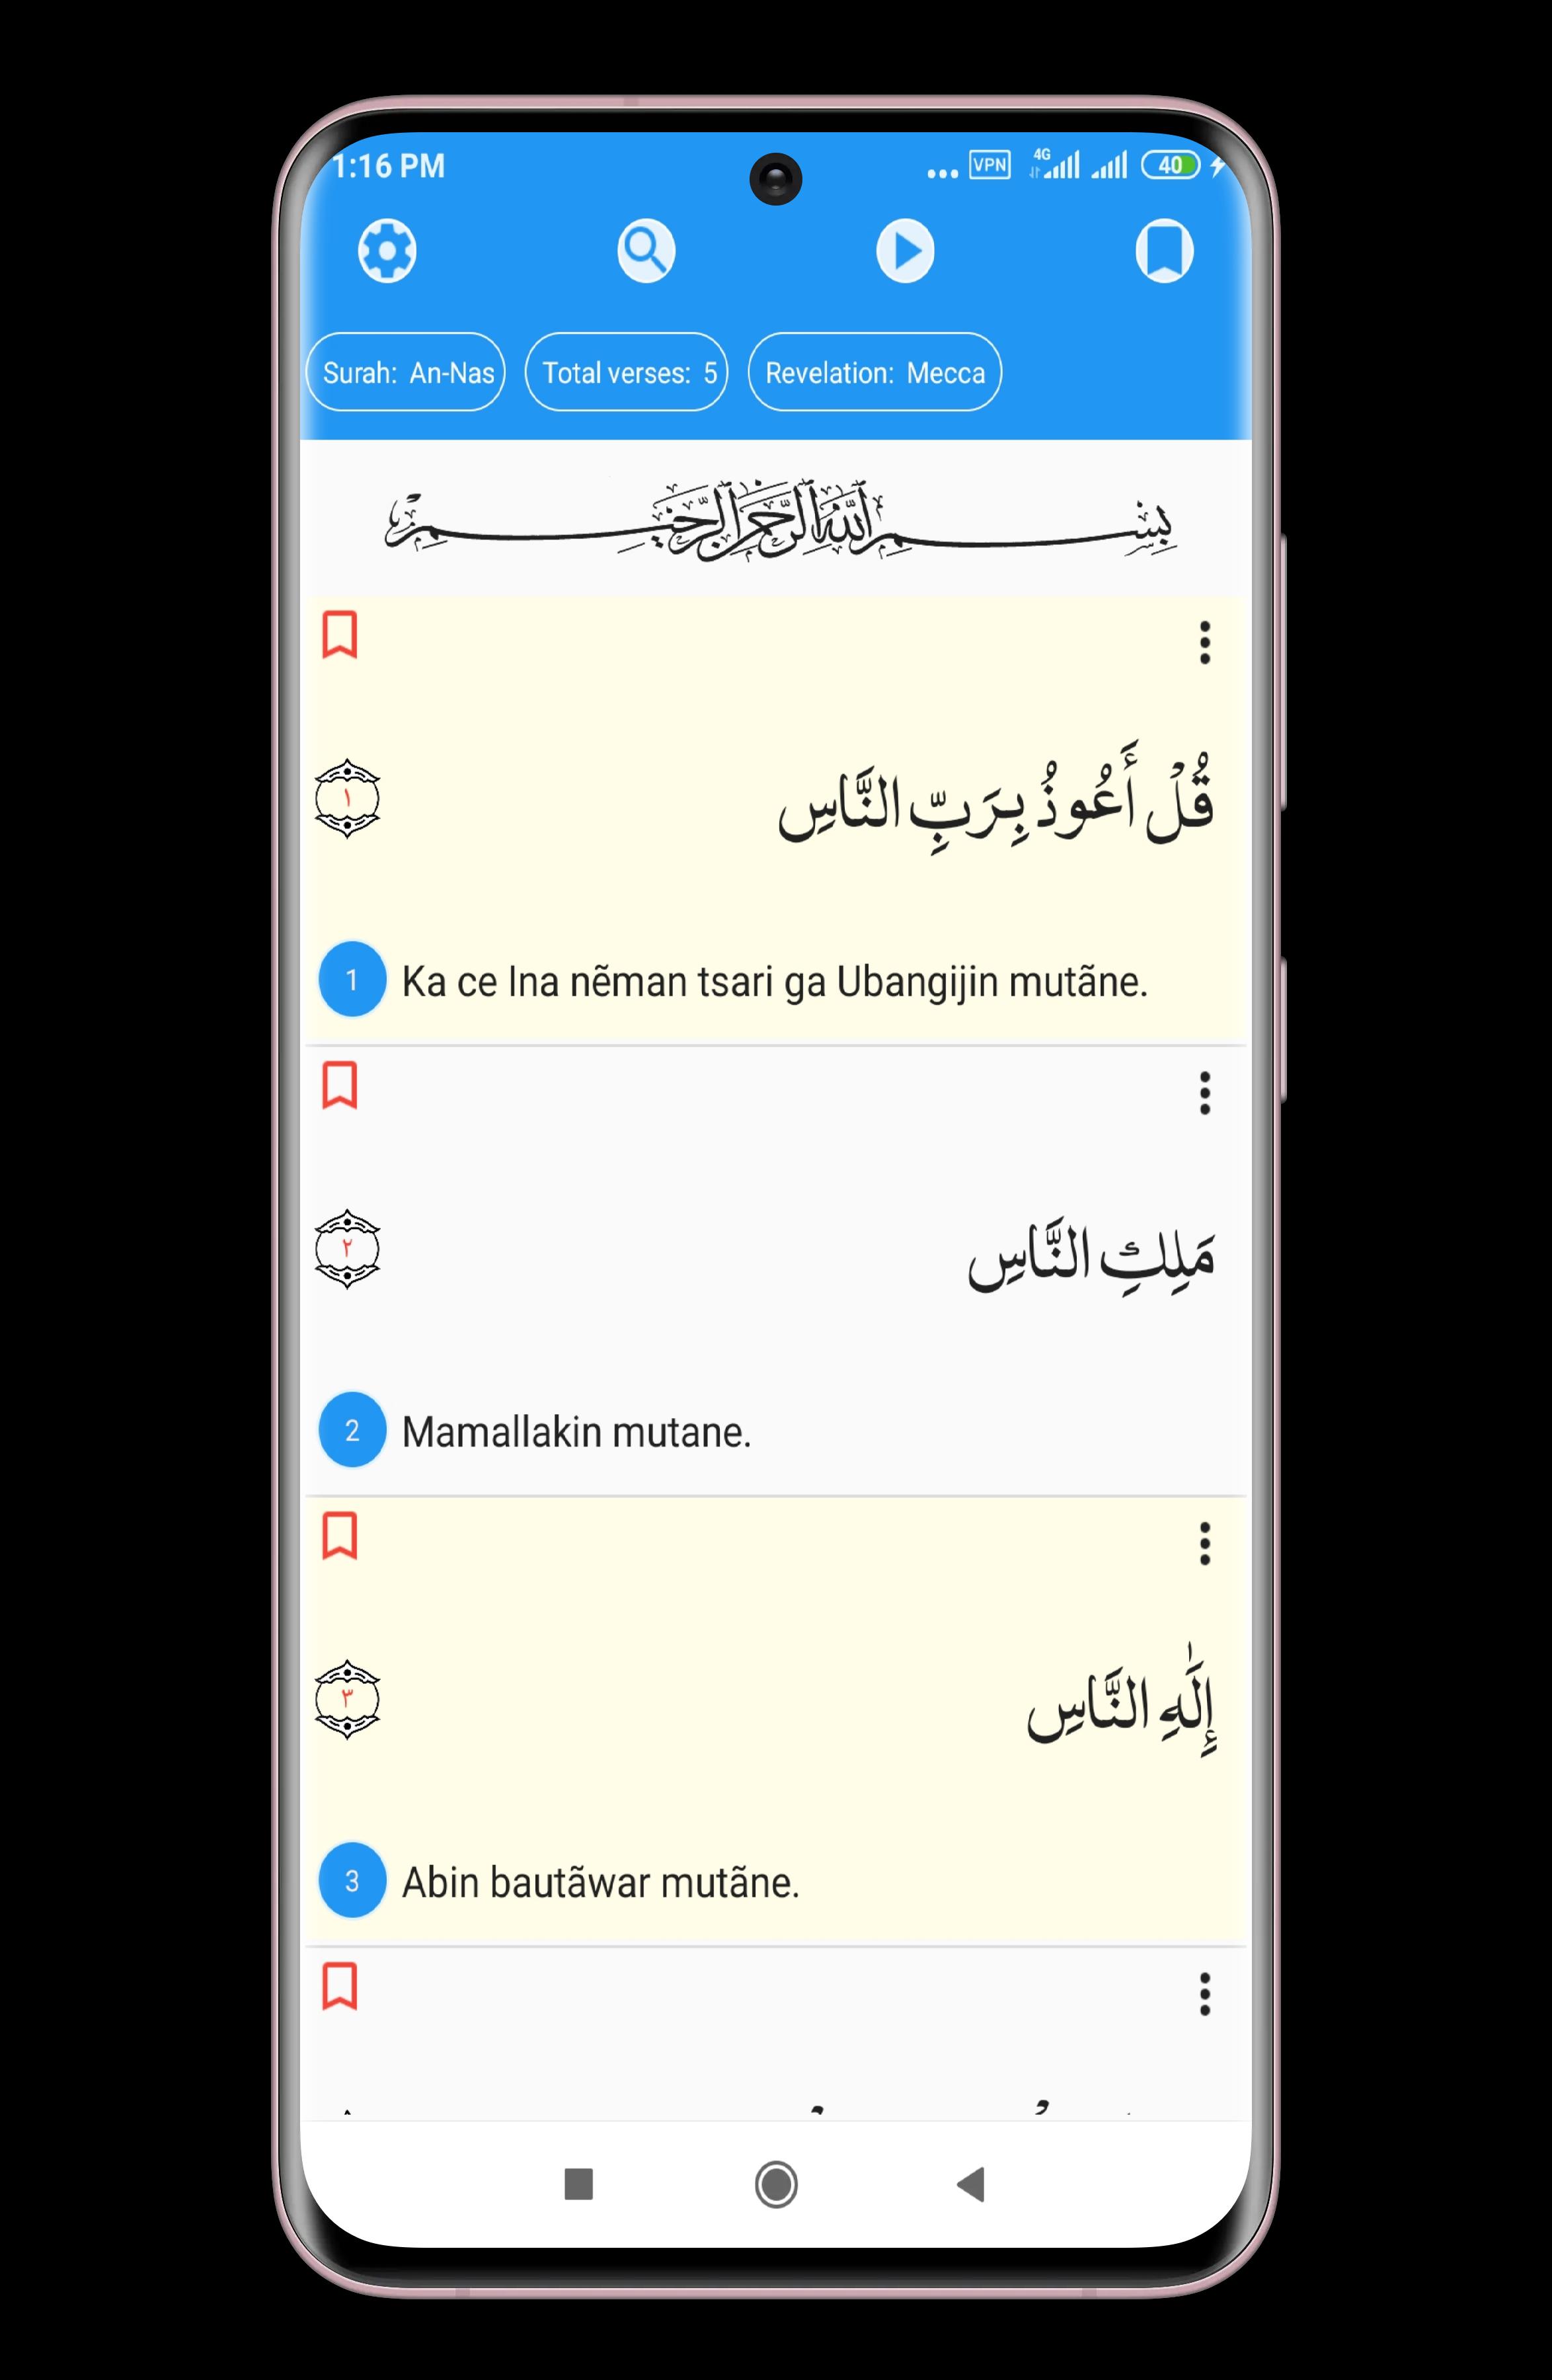 Hausa Qur'an - Qur'an with Hausa Translation 1.1 Screenshot 7